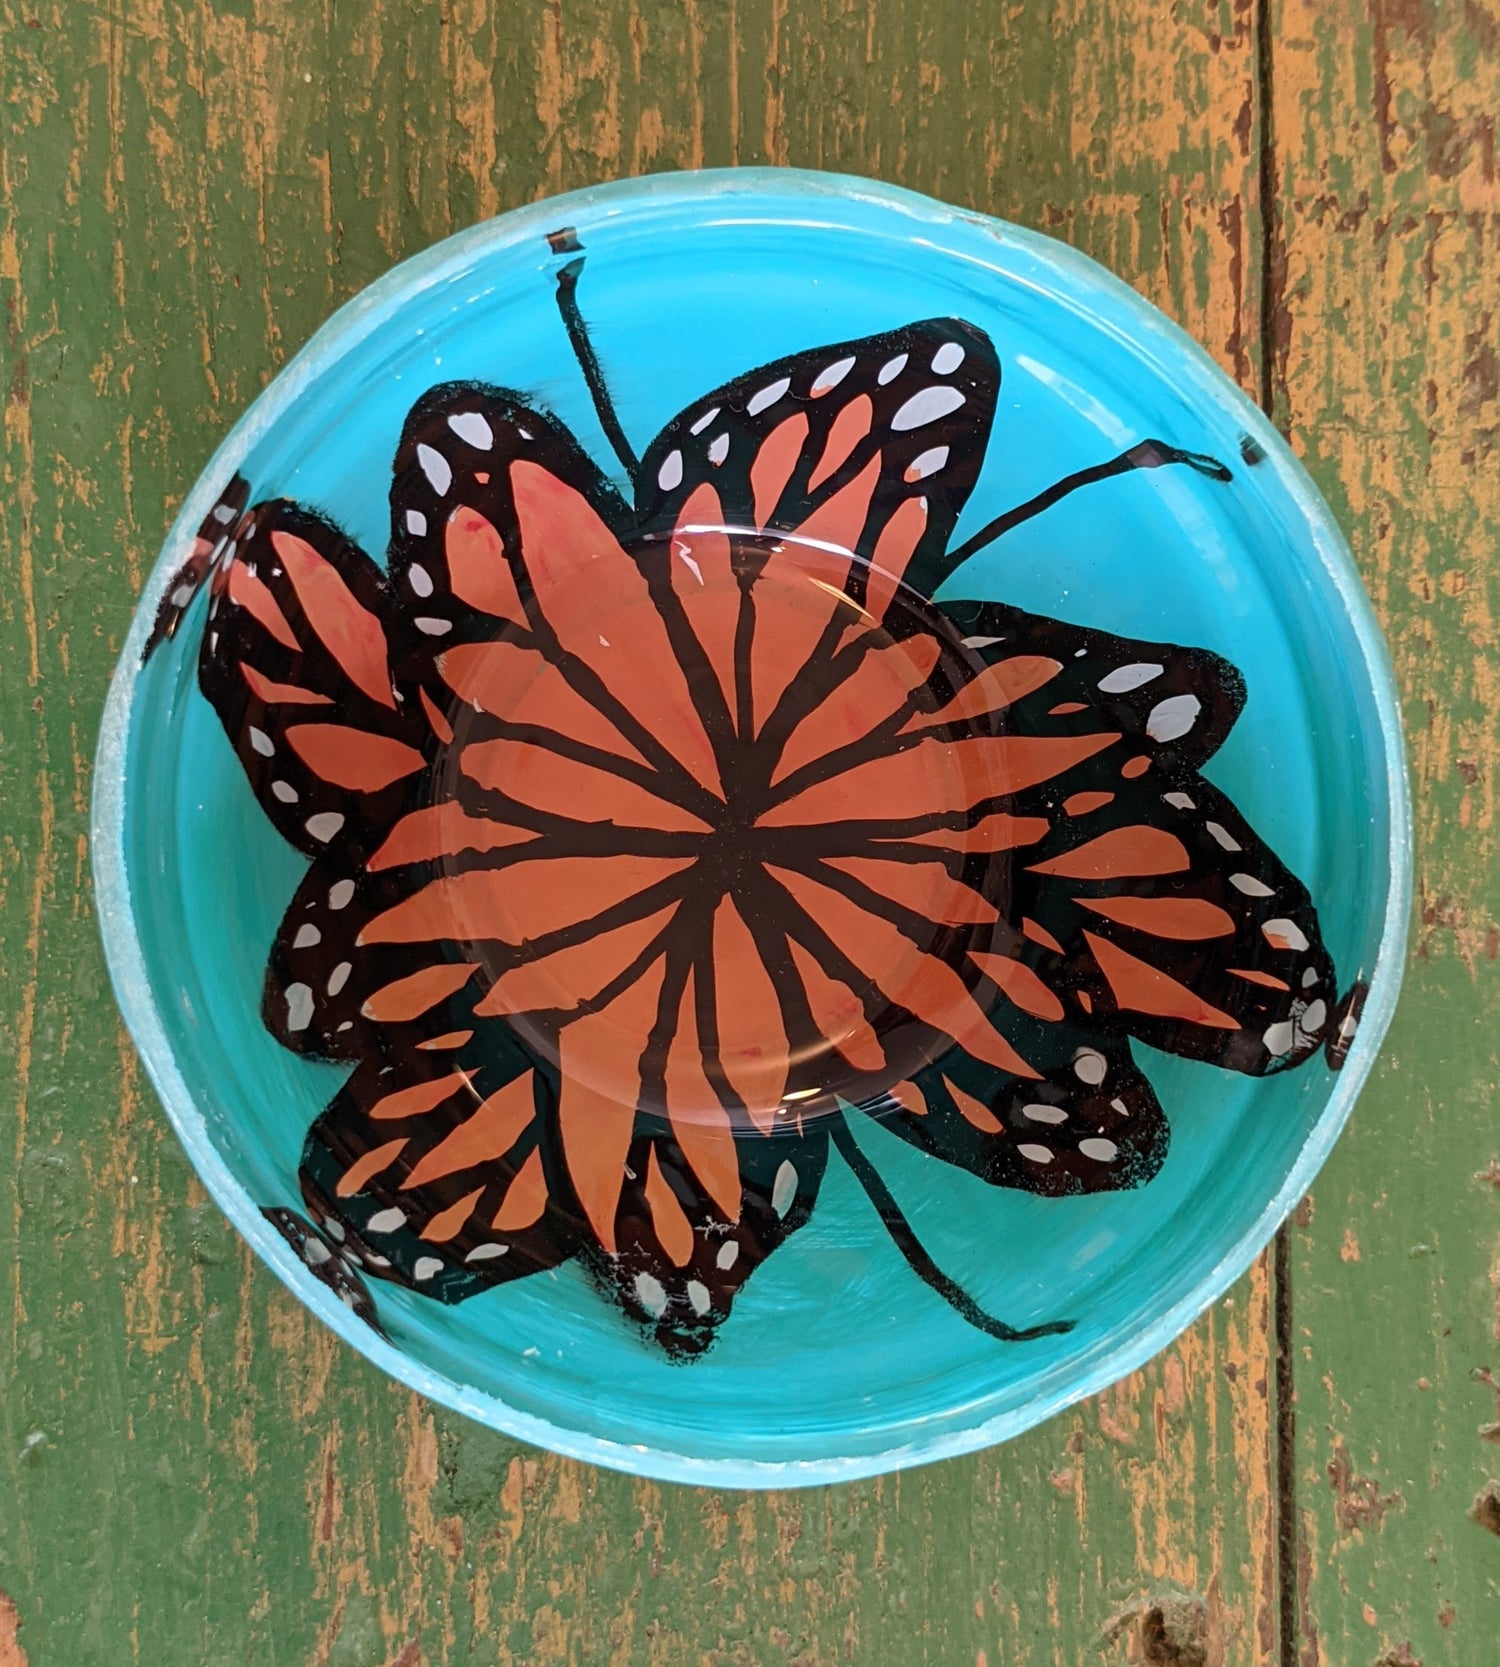 Monarch wings design mini painted bowl, by Skavenge Art